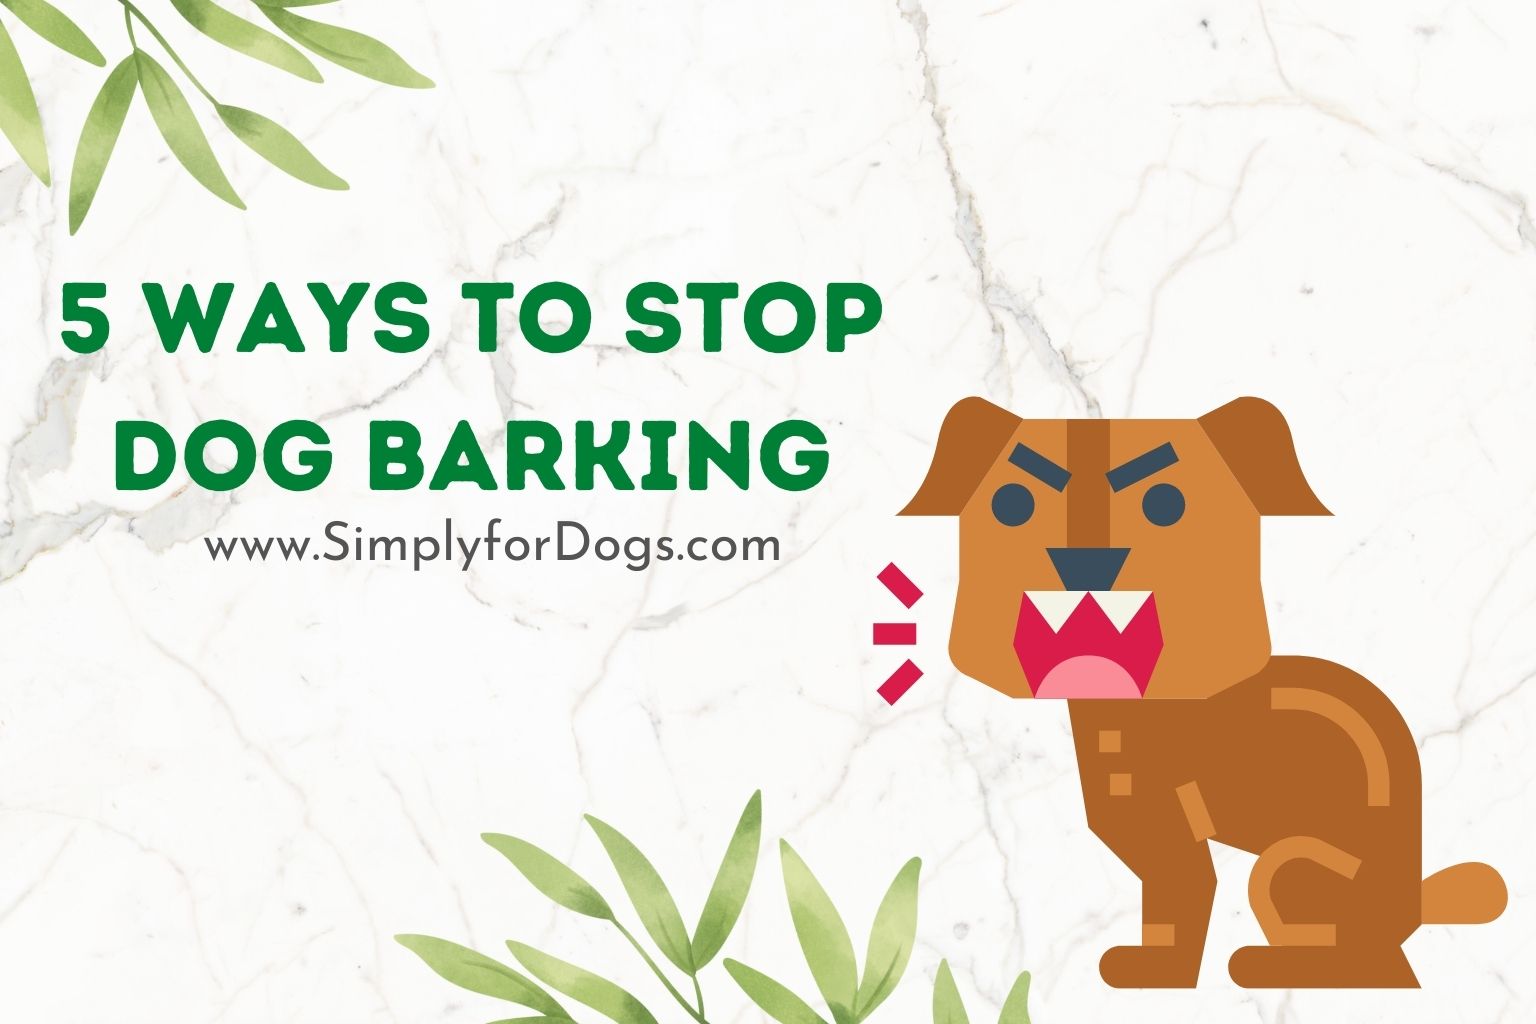 5 Ways to Stop Dog Barking